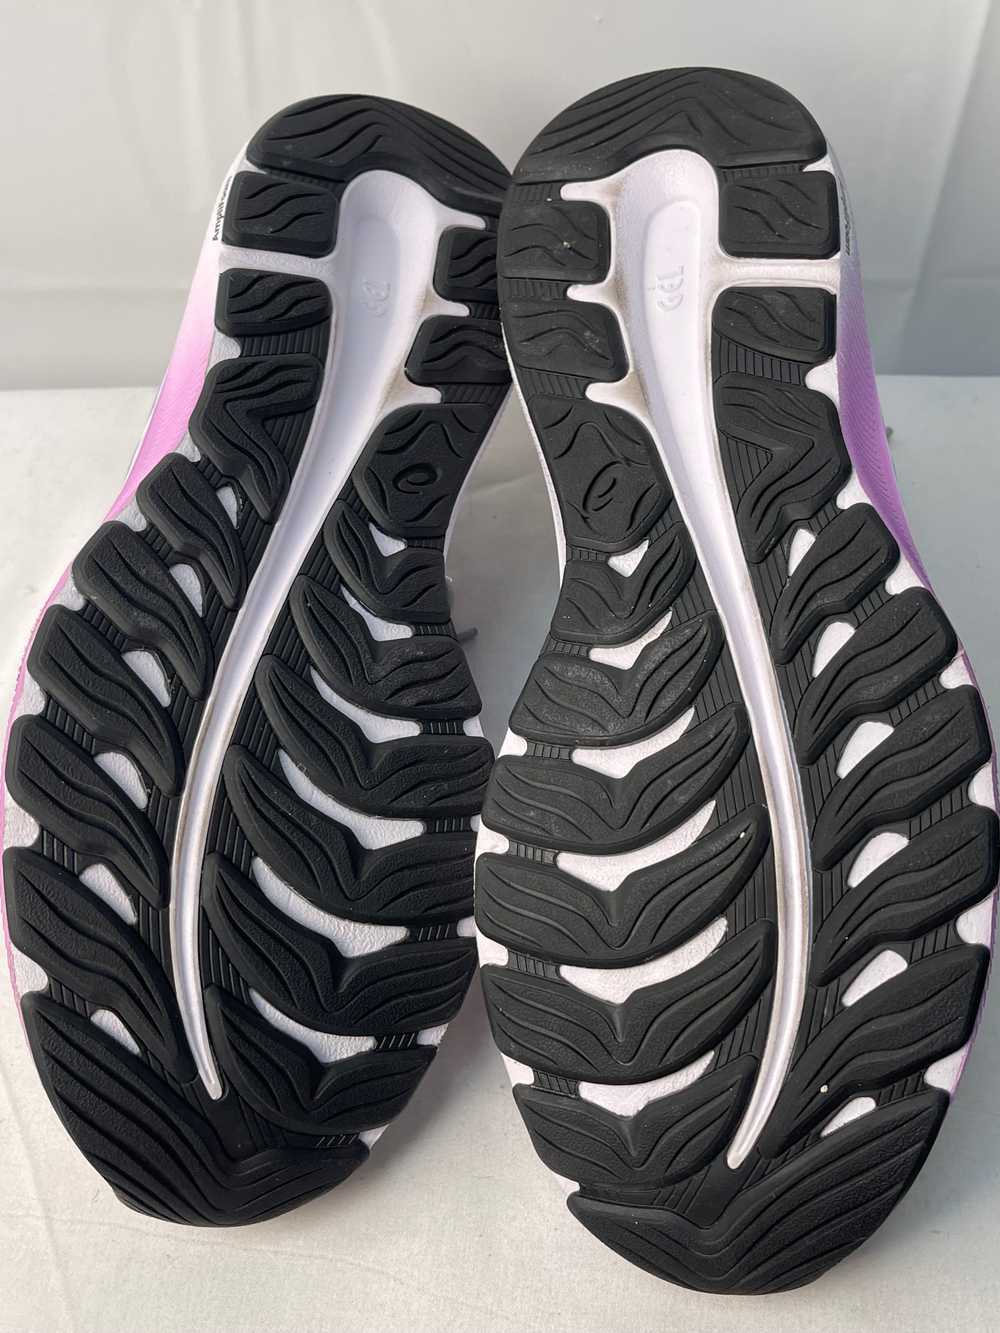 Asics Women's Gray Ortholite Sneakers Size 10 - image 3